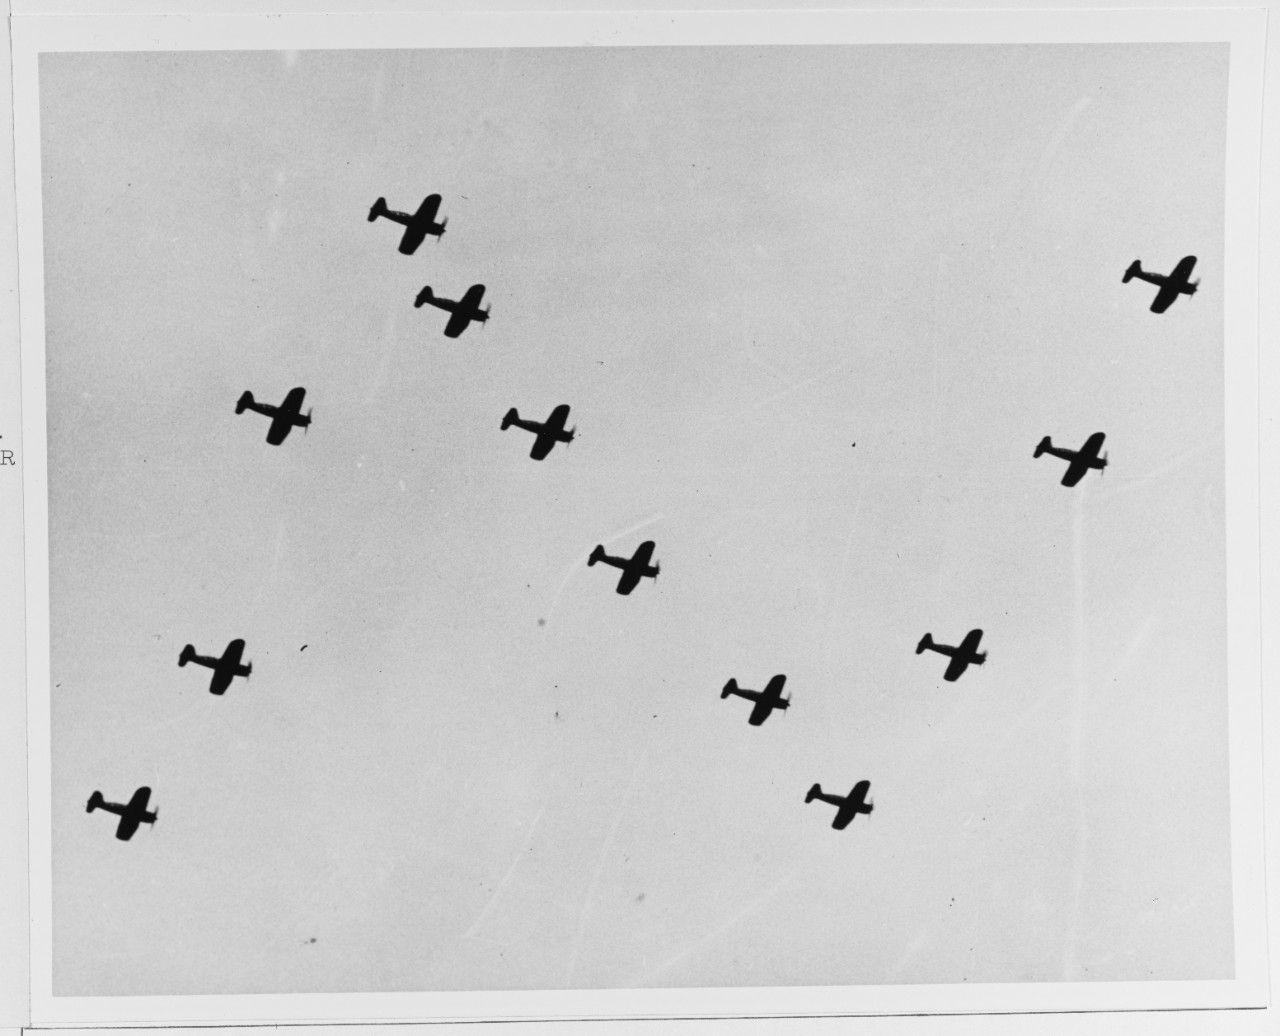 A Formation Flies over Washington, D.C.